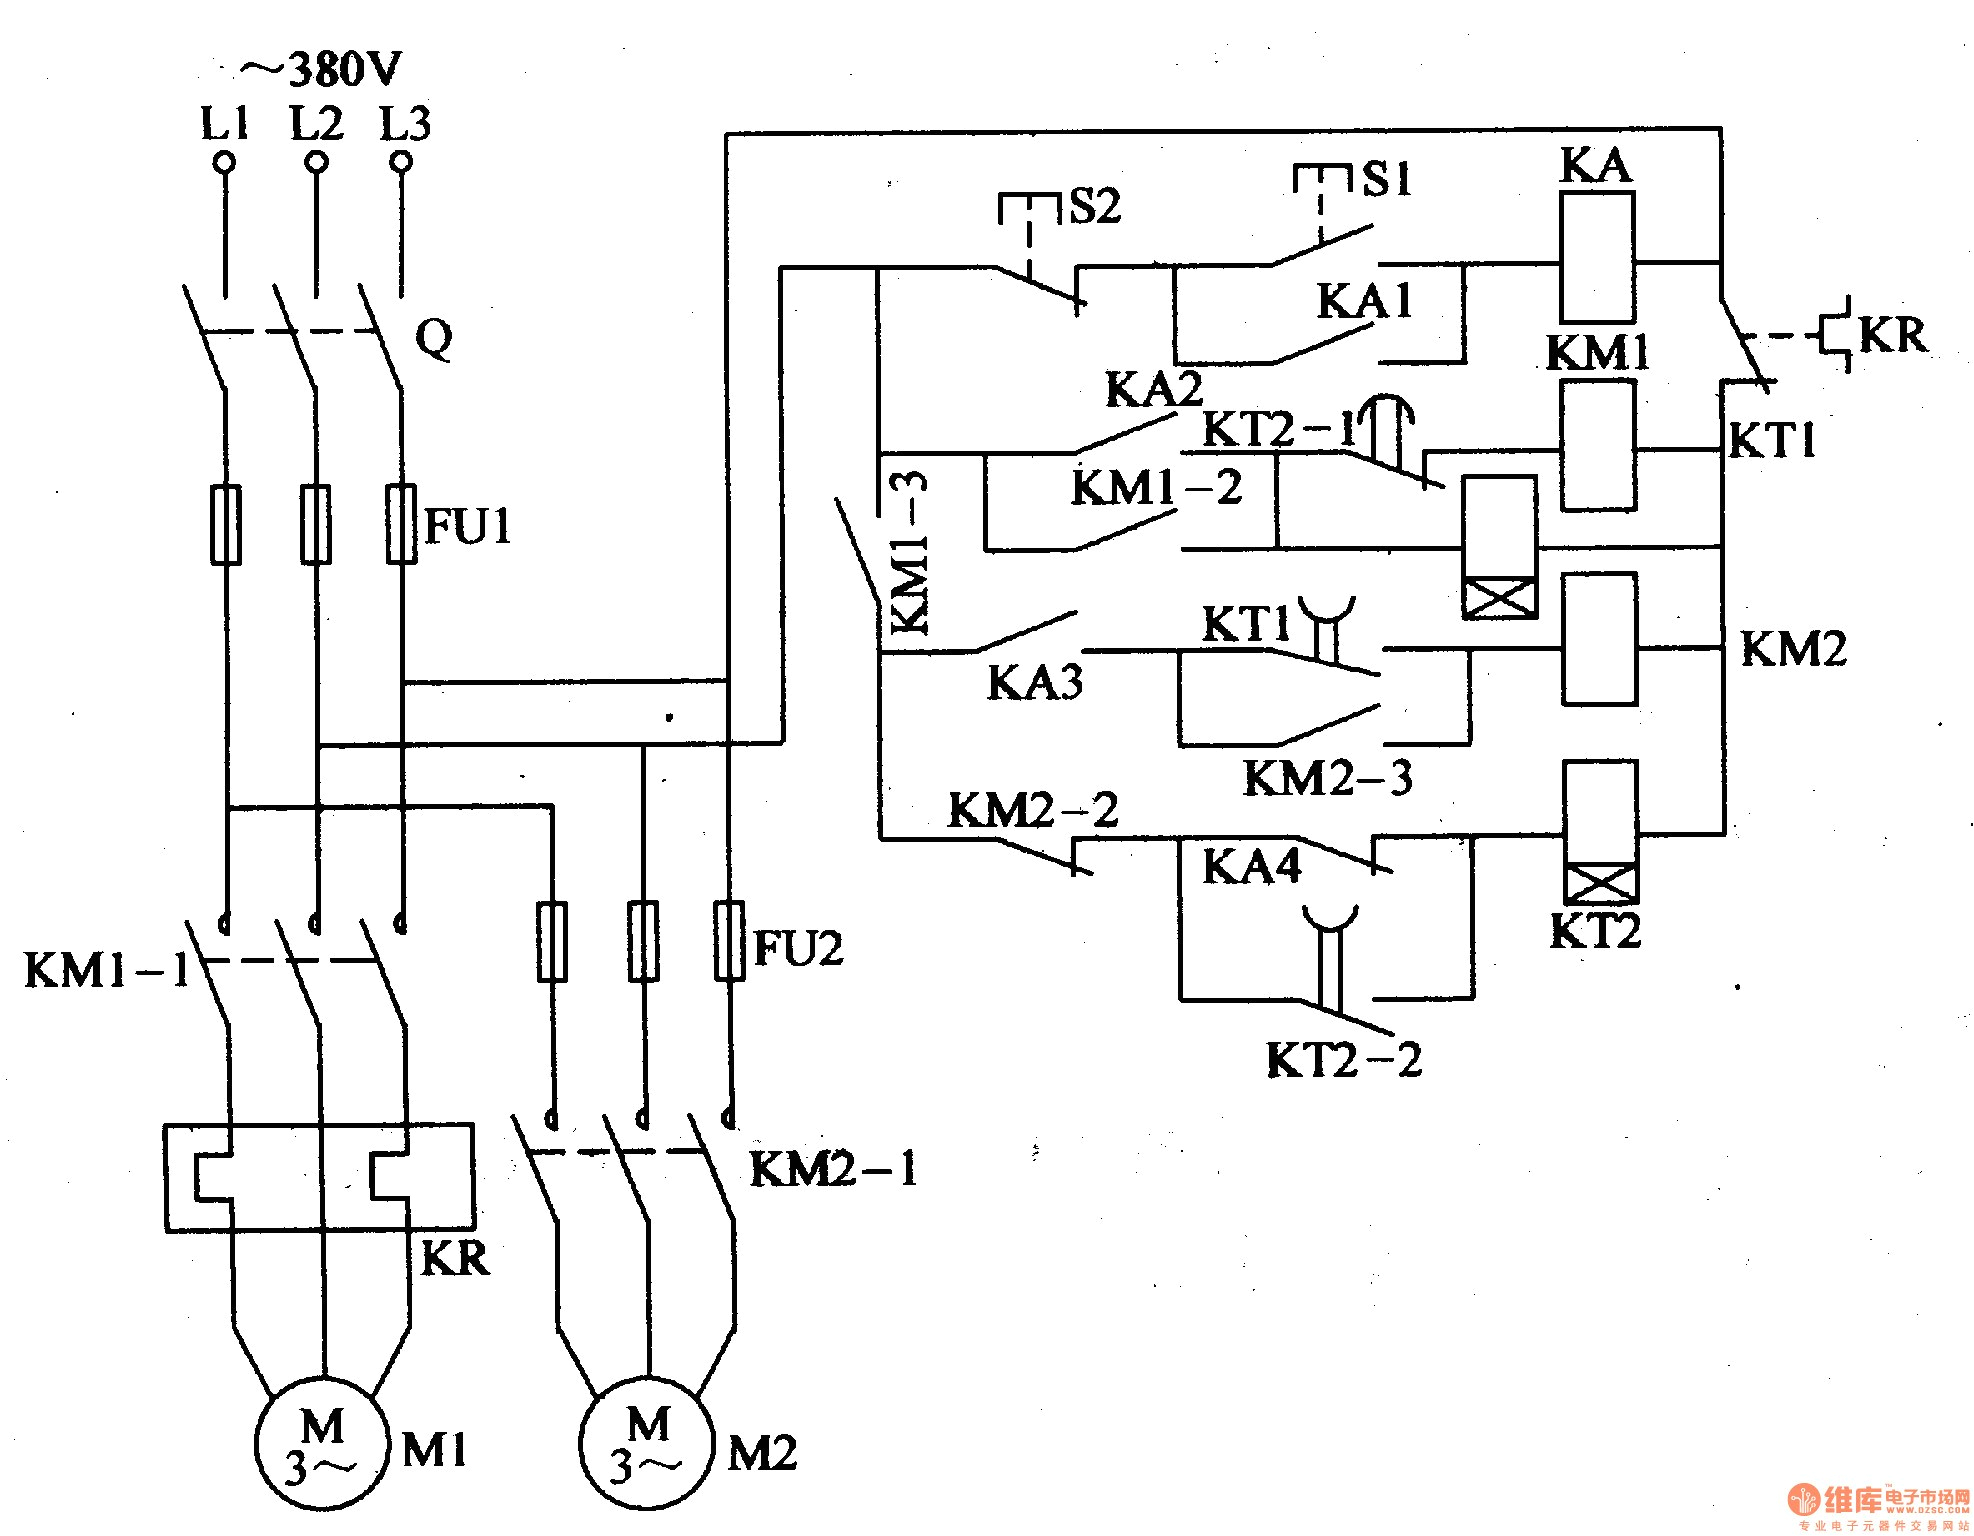 control wiring diagram pdf wiring diagram fascinating lift control panel wiring diagram pdf control panel wiring diagram pdf